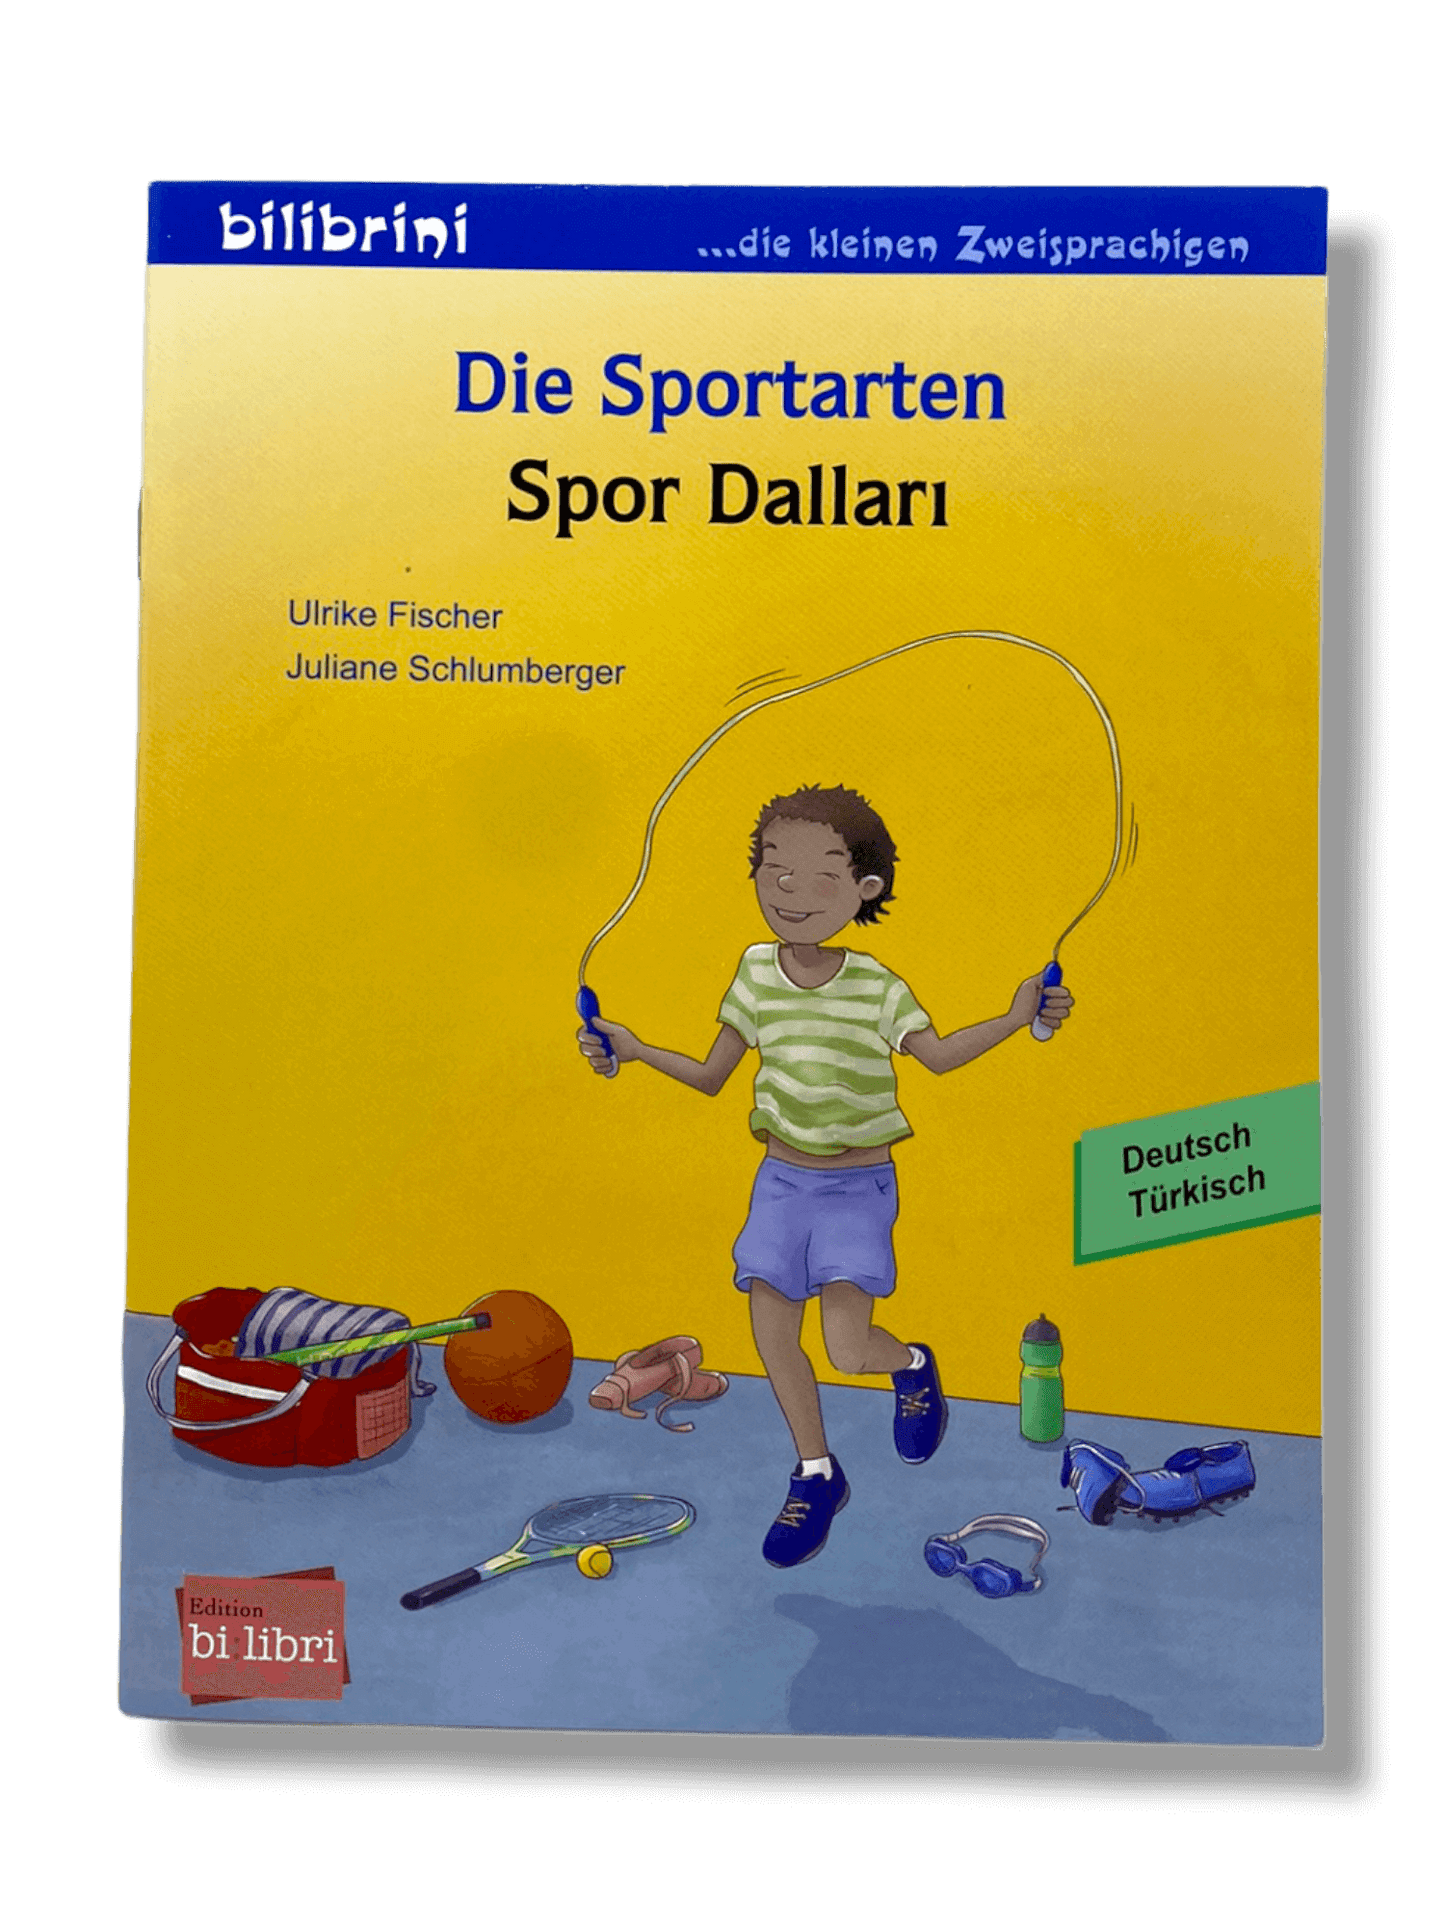 The sports Turkish/German 